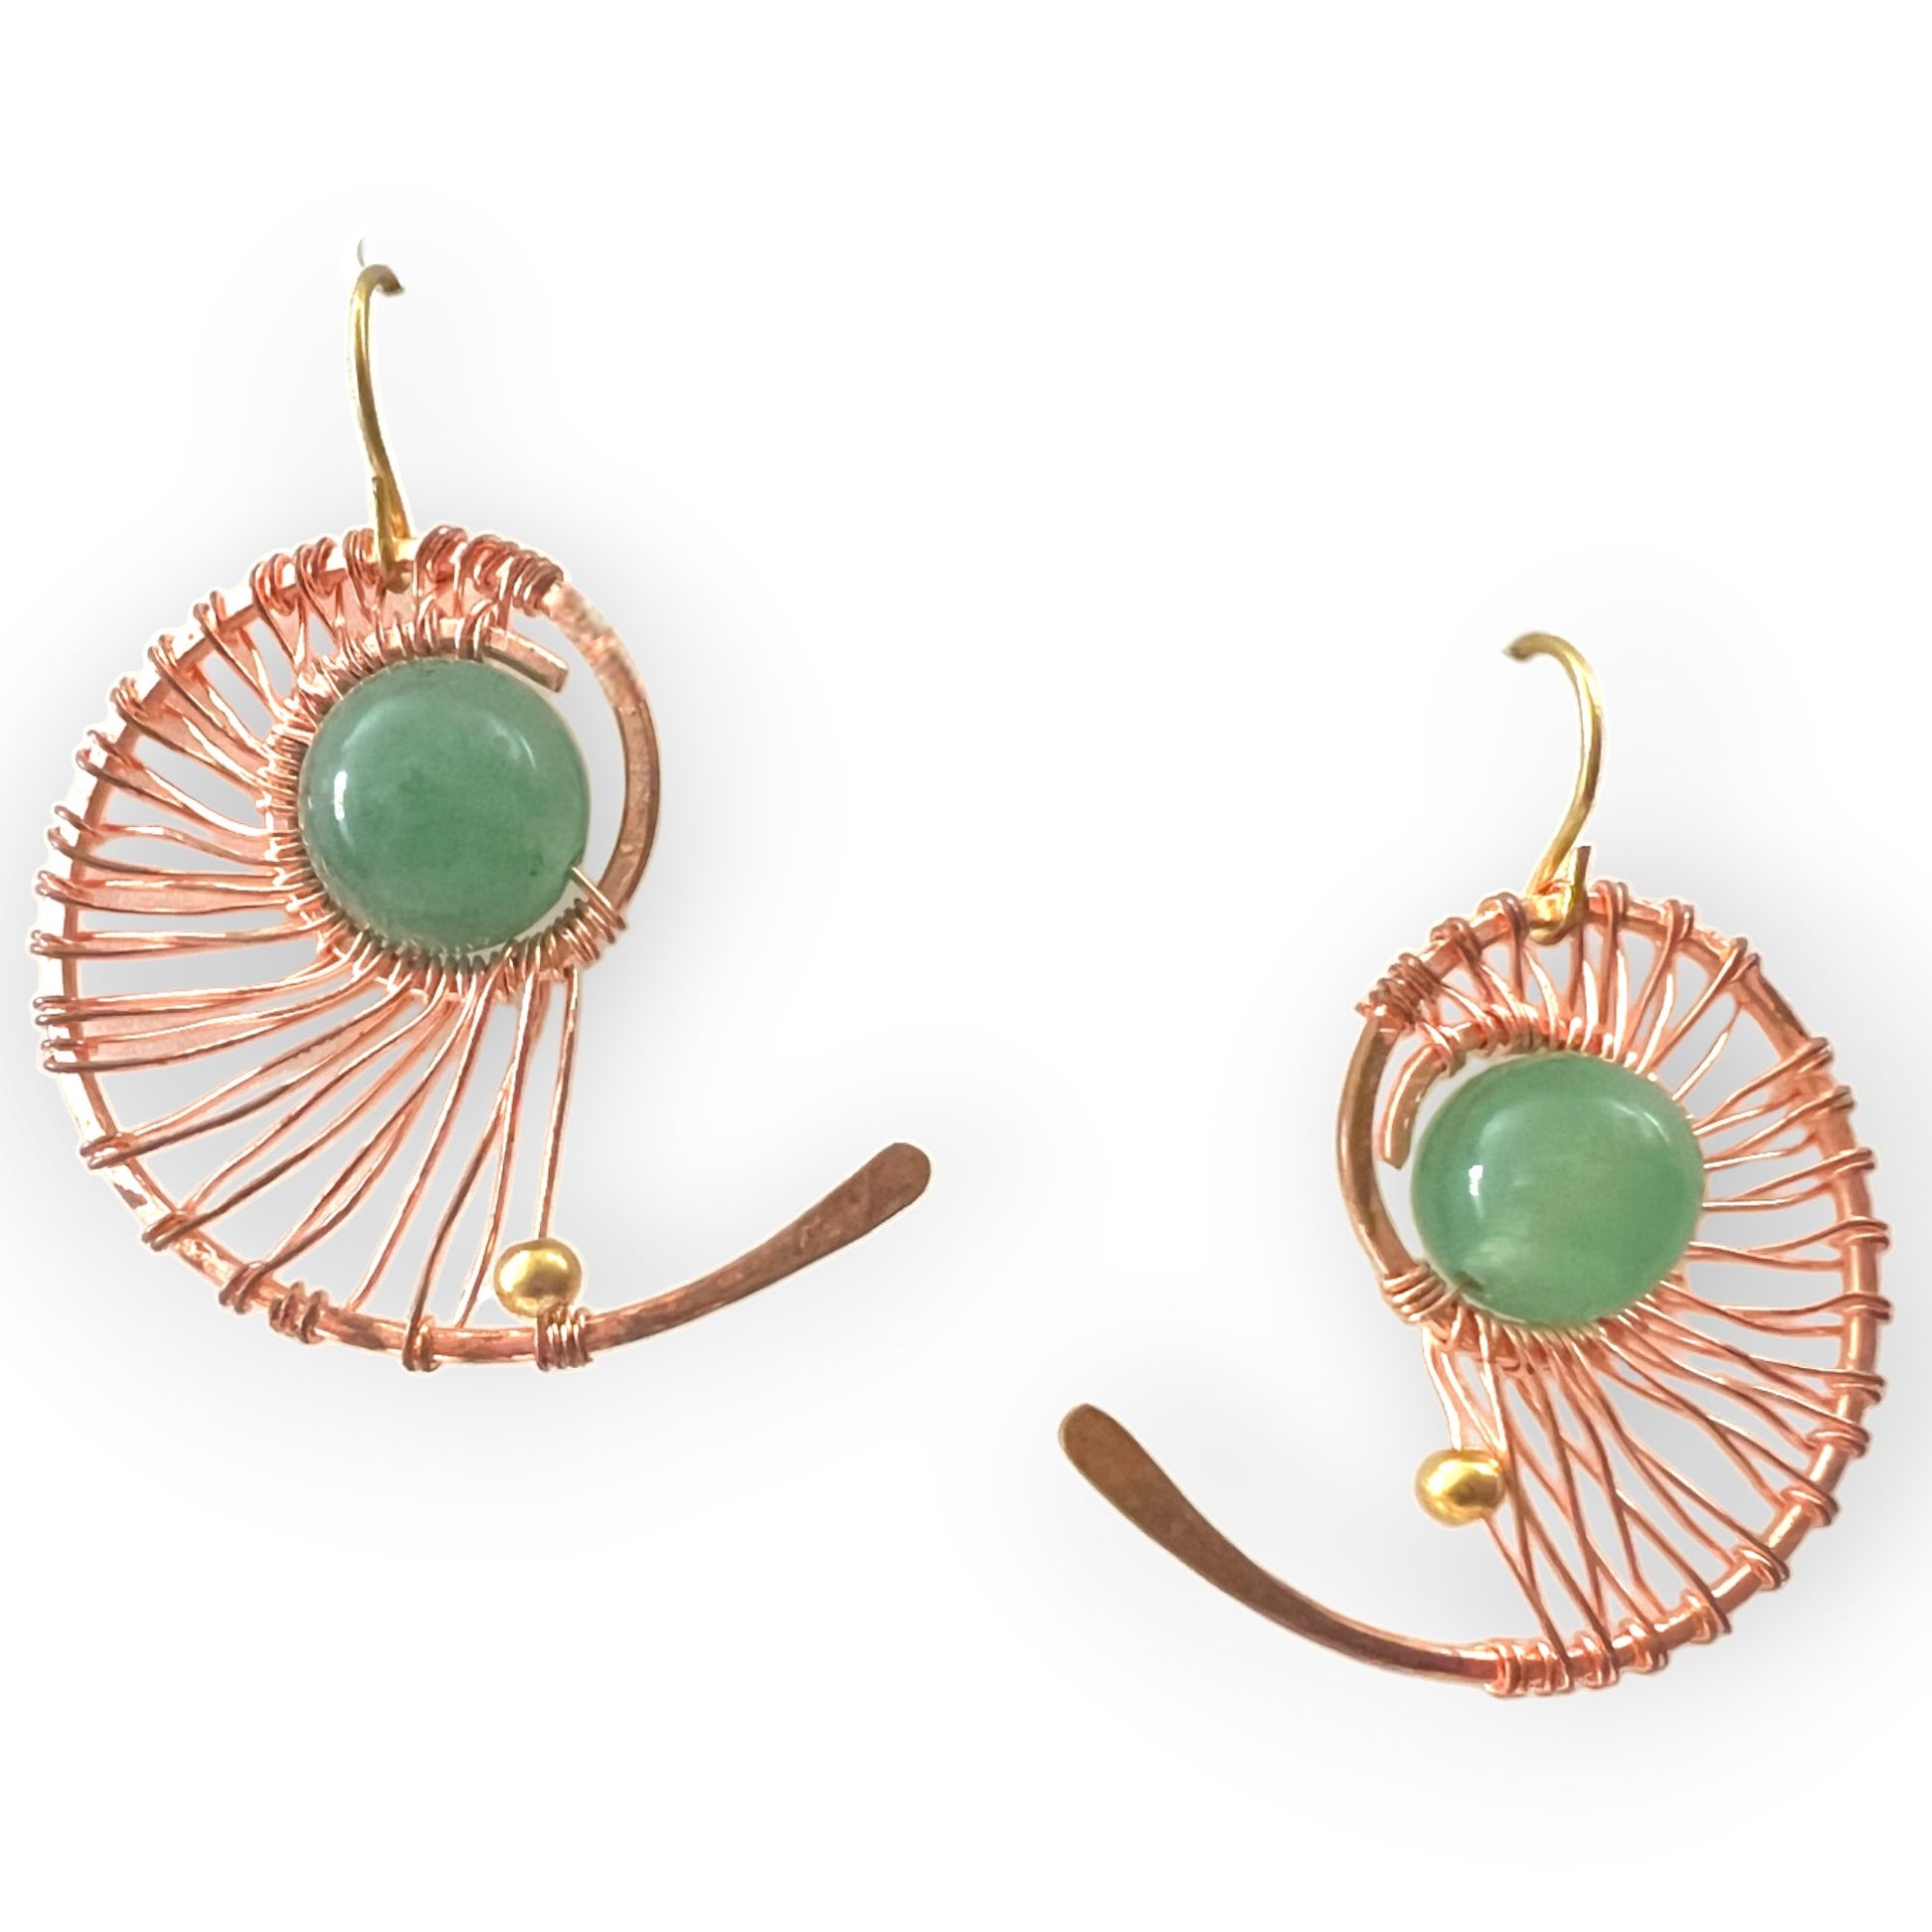 Copper swirl dangling drop earring with green center - Sundara Joon